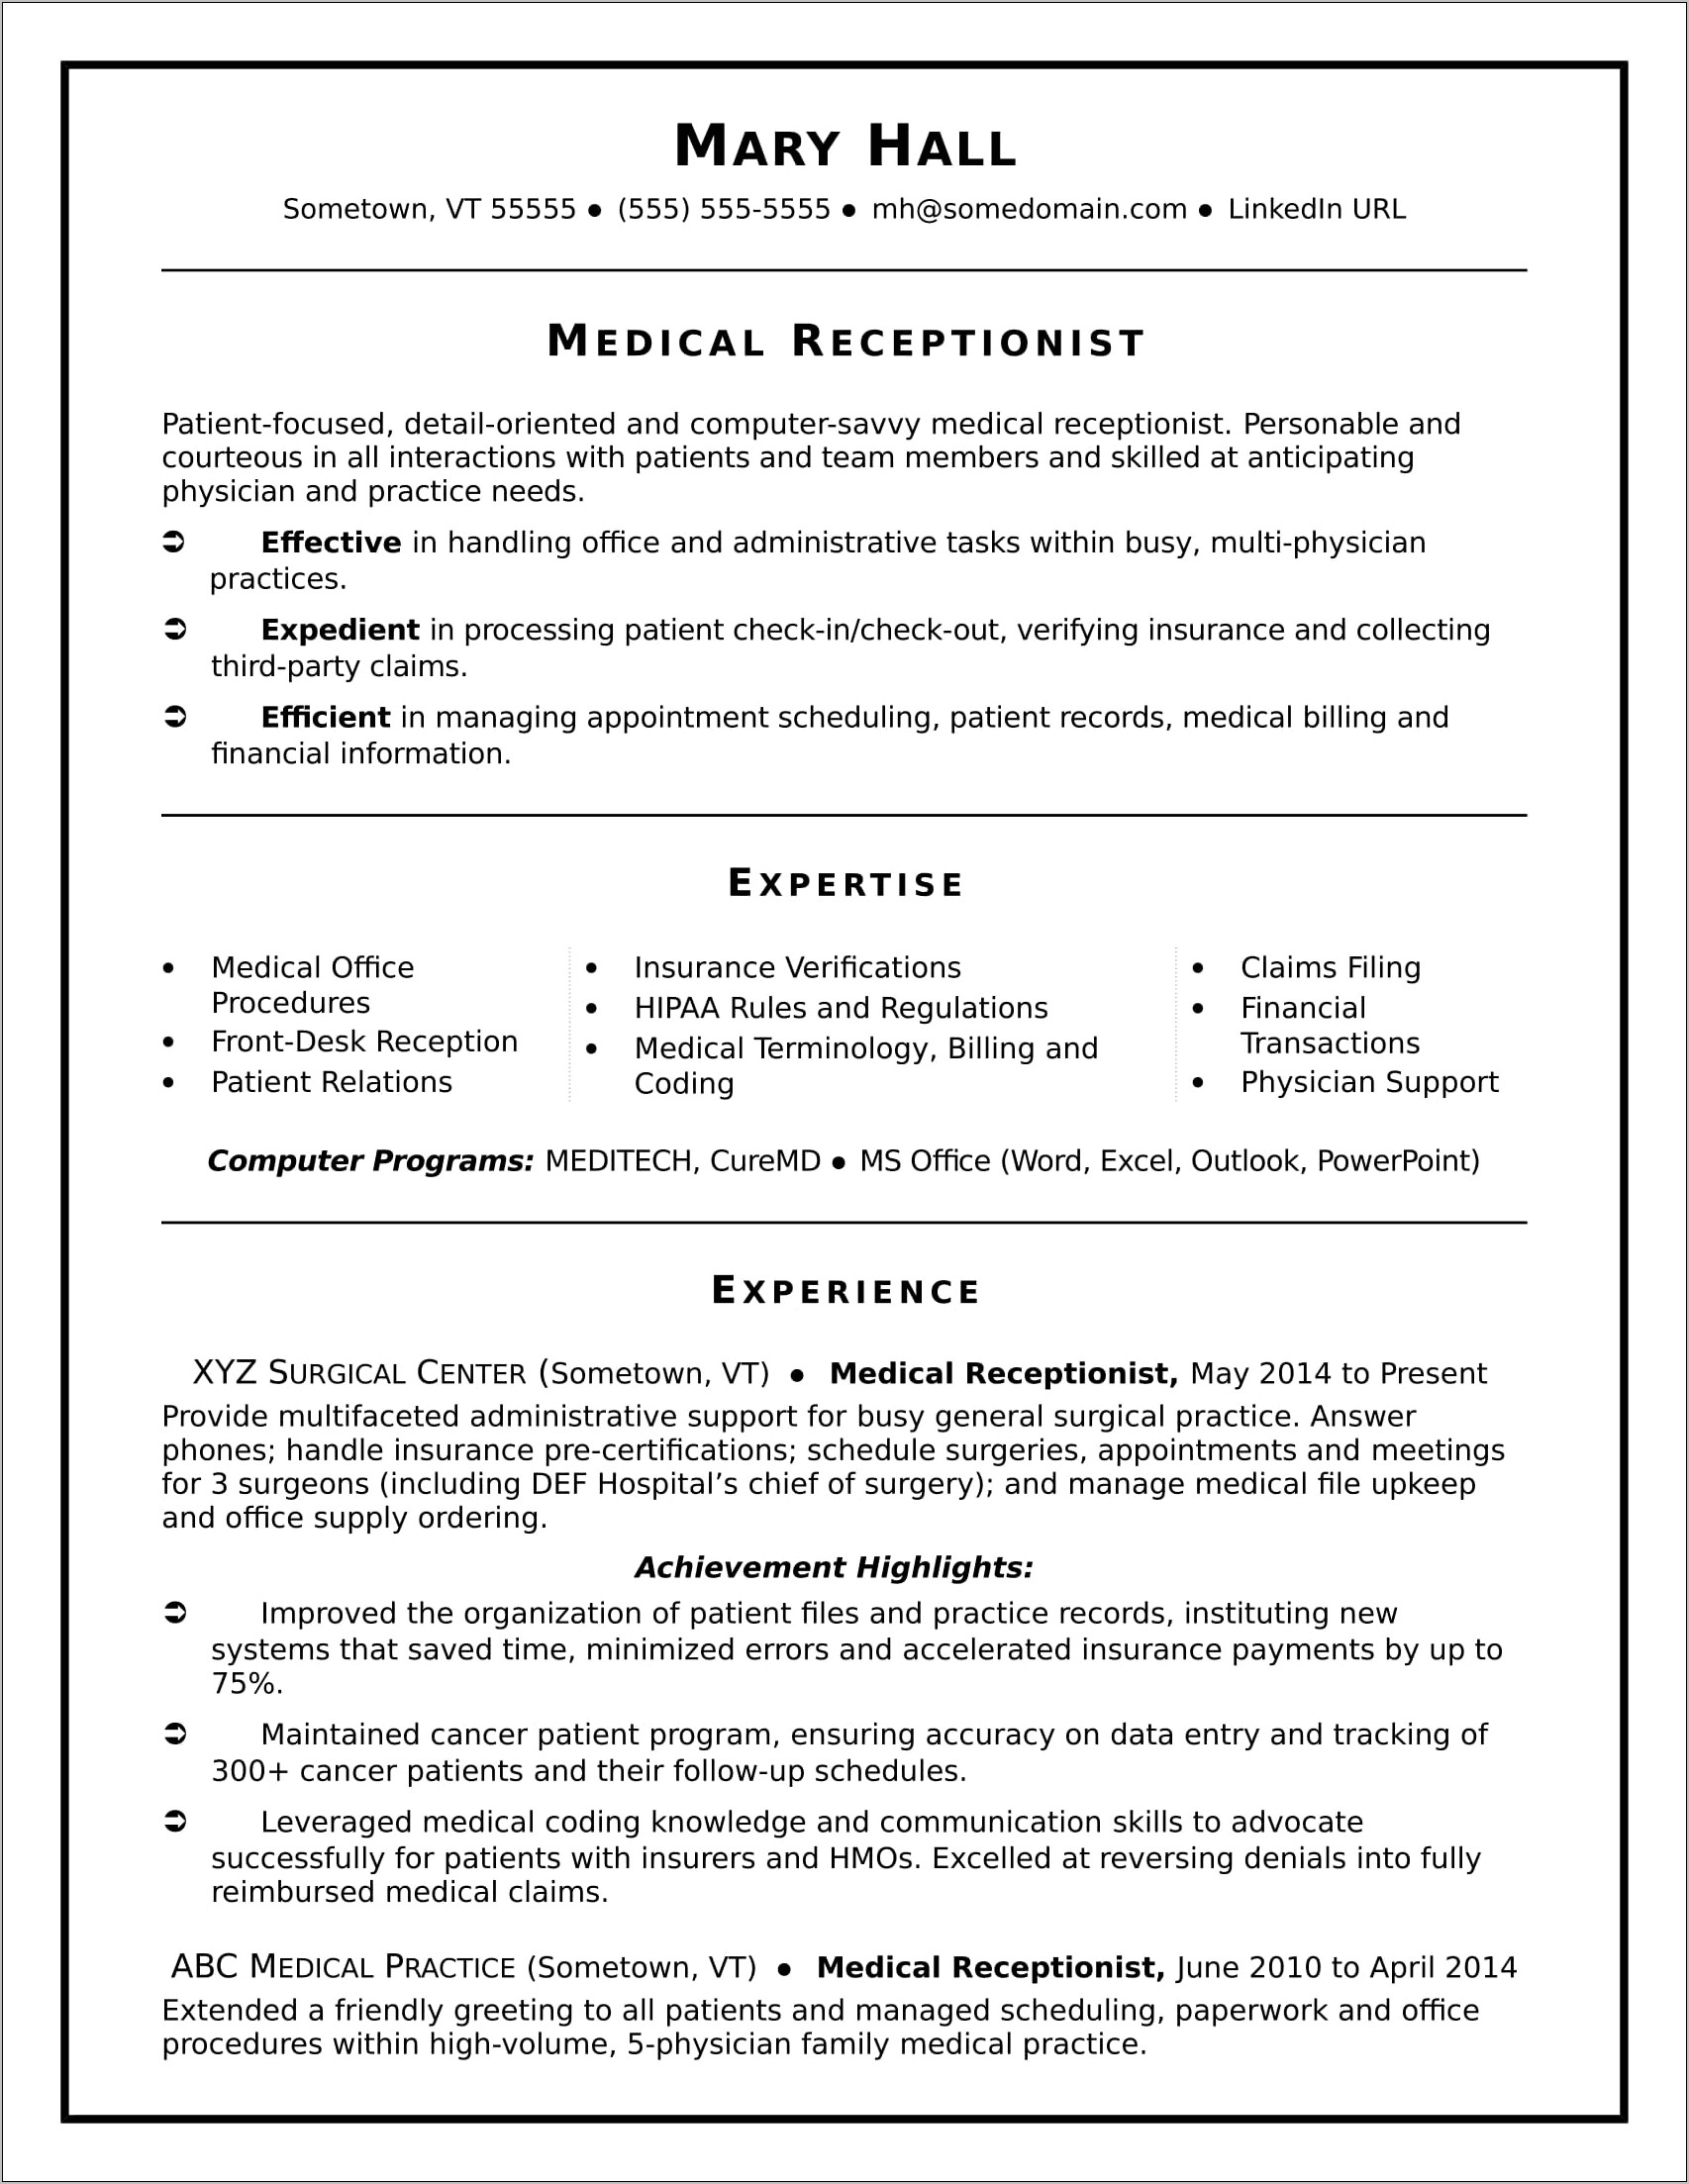 Resume Objective Statement School Receptionist